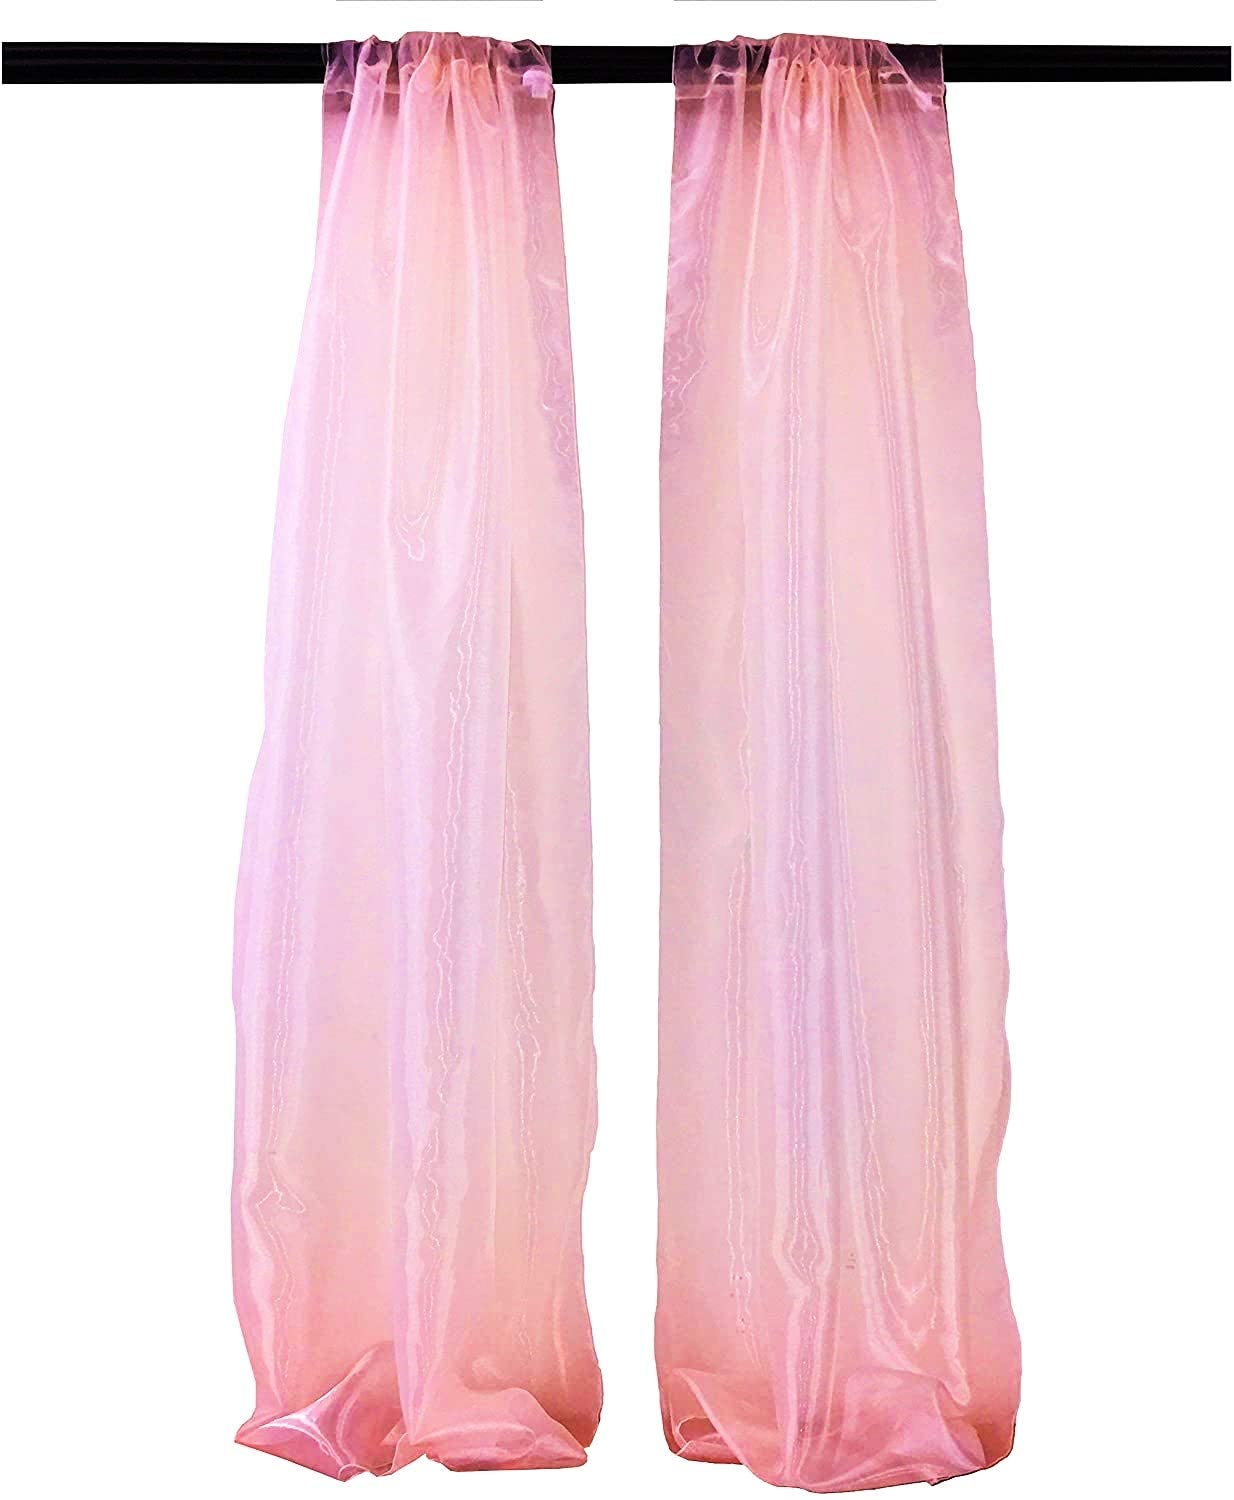 100% Polyester Sheer Mirror Organza Backdrop Drape, Curtain Panels, Room Divider, 1 Pair (Light Pink,